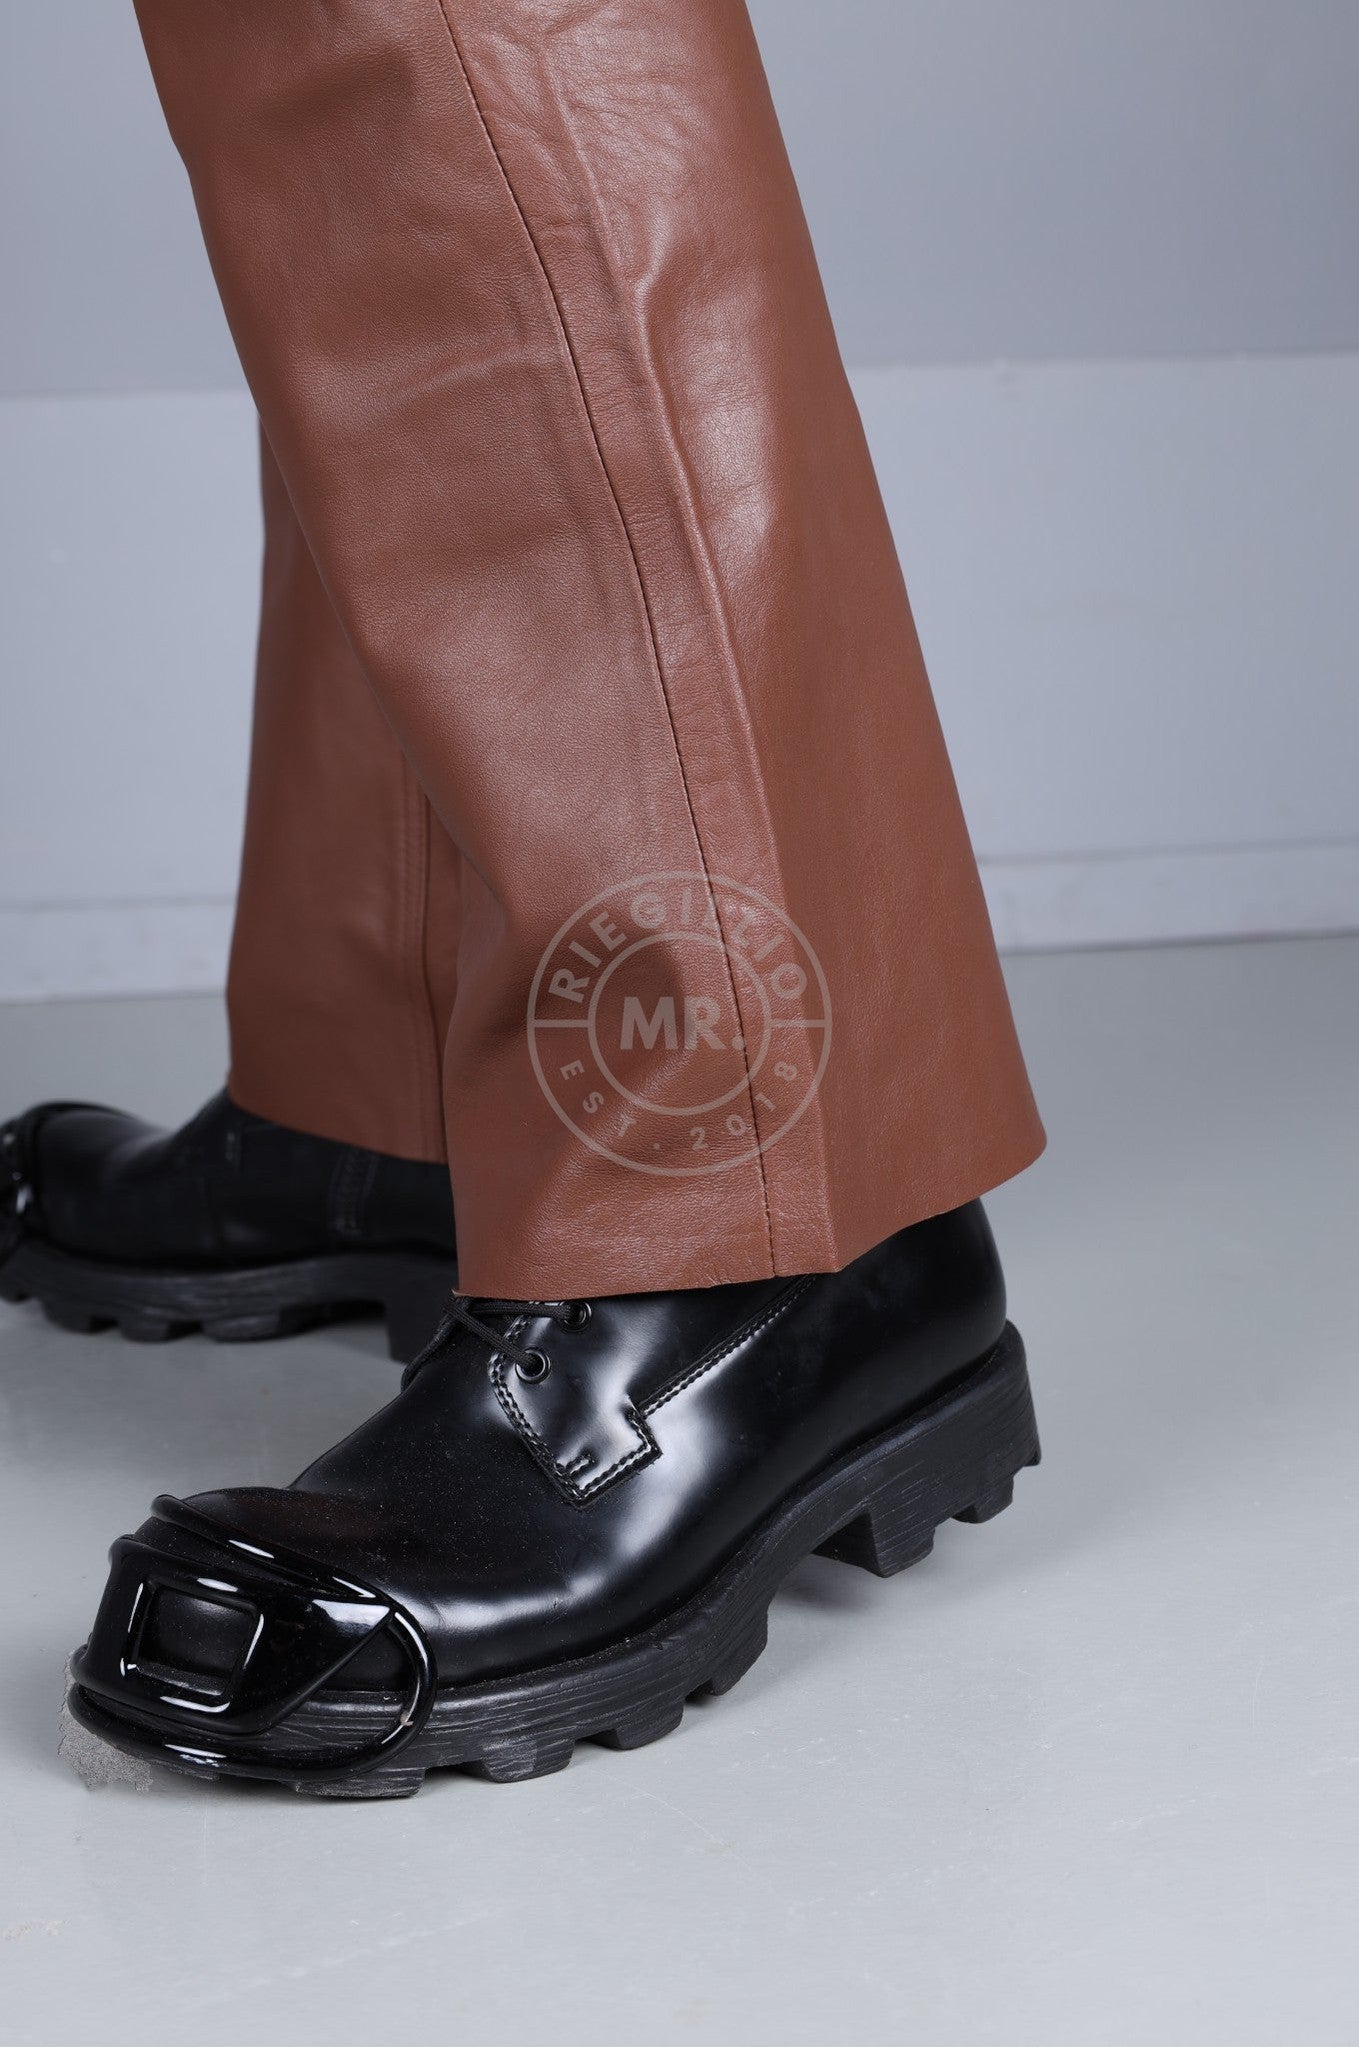 Cinnamon Brown Leather Bootcut Pants